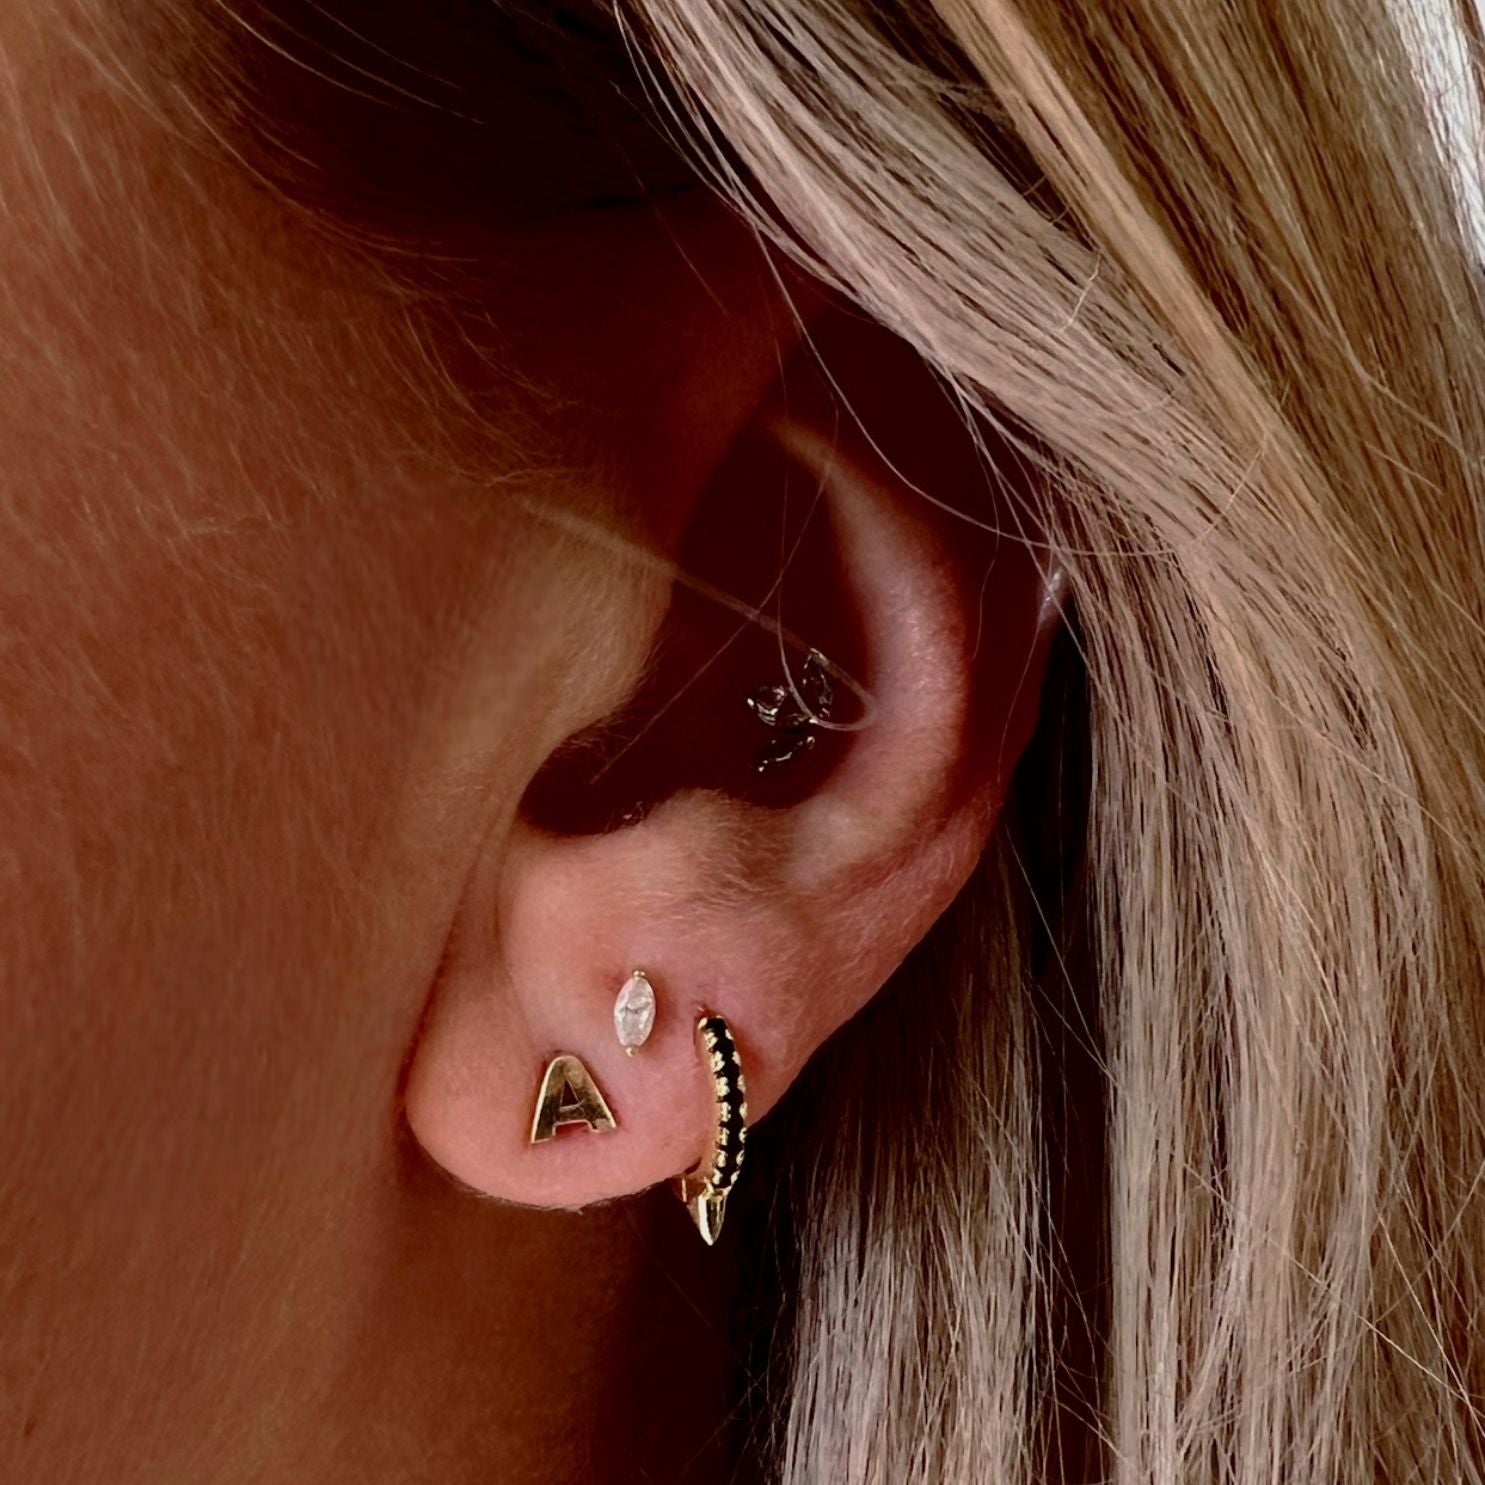 Noir gold and black stone spike huggie hoop earring - Helix & Conch